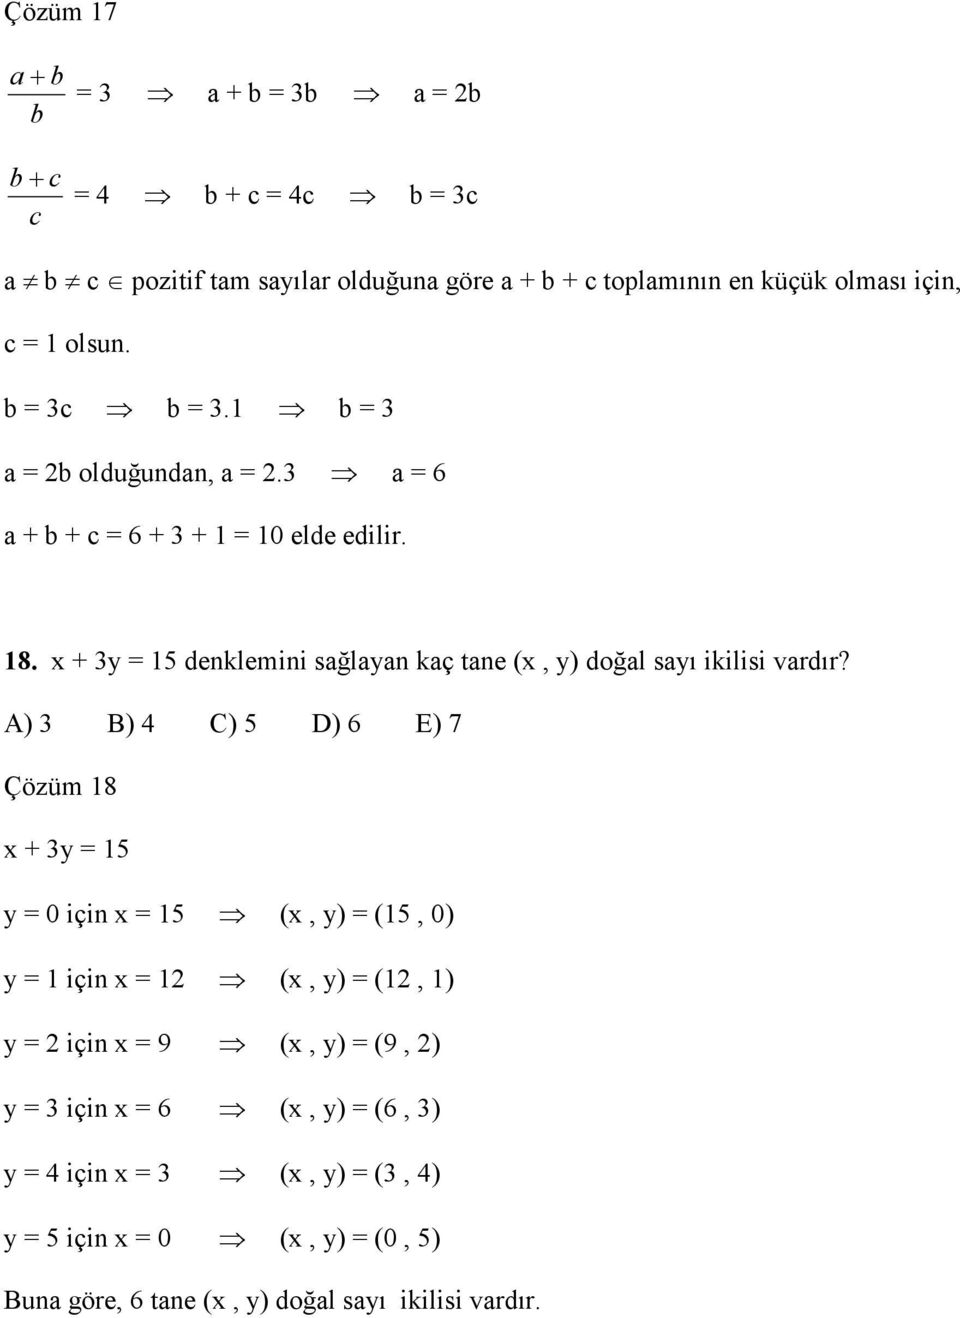 x + 3y 15 denklemini sağlayan kaç tane (x, y) doğal sayı ikilisi vardır?